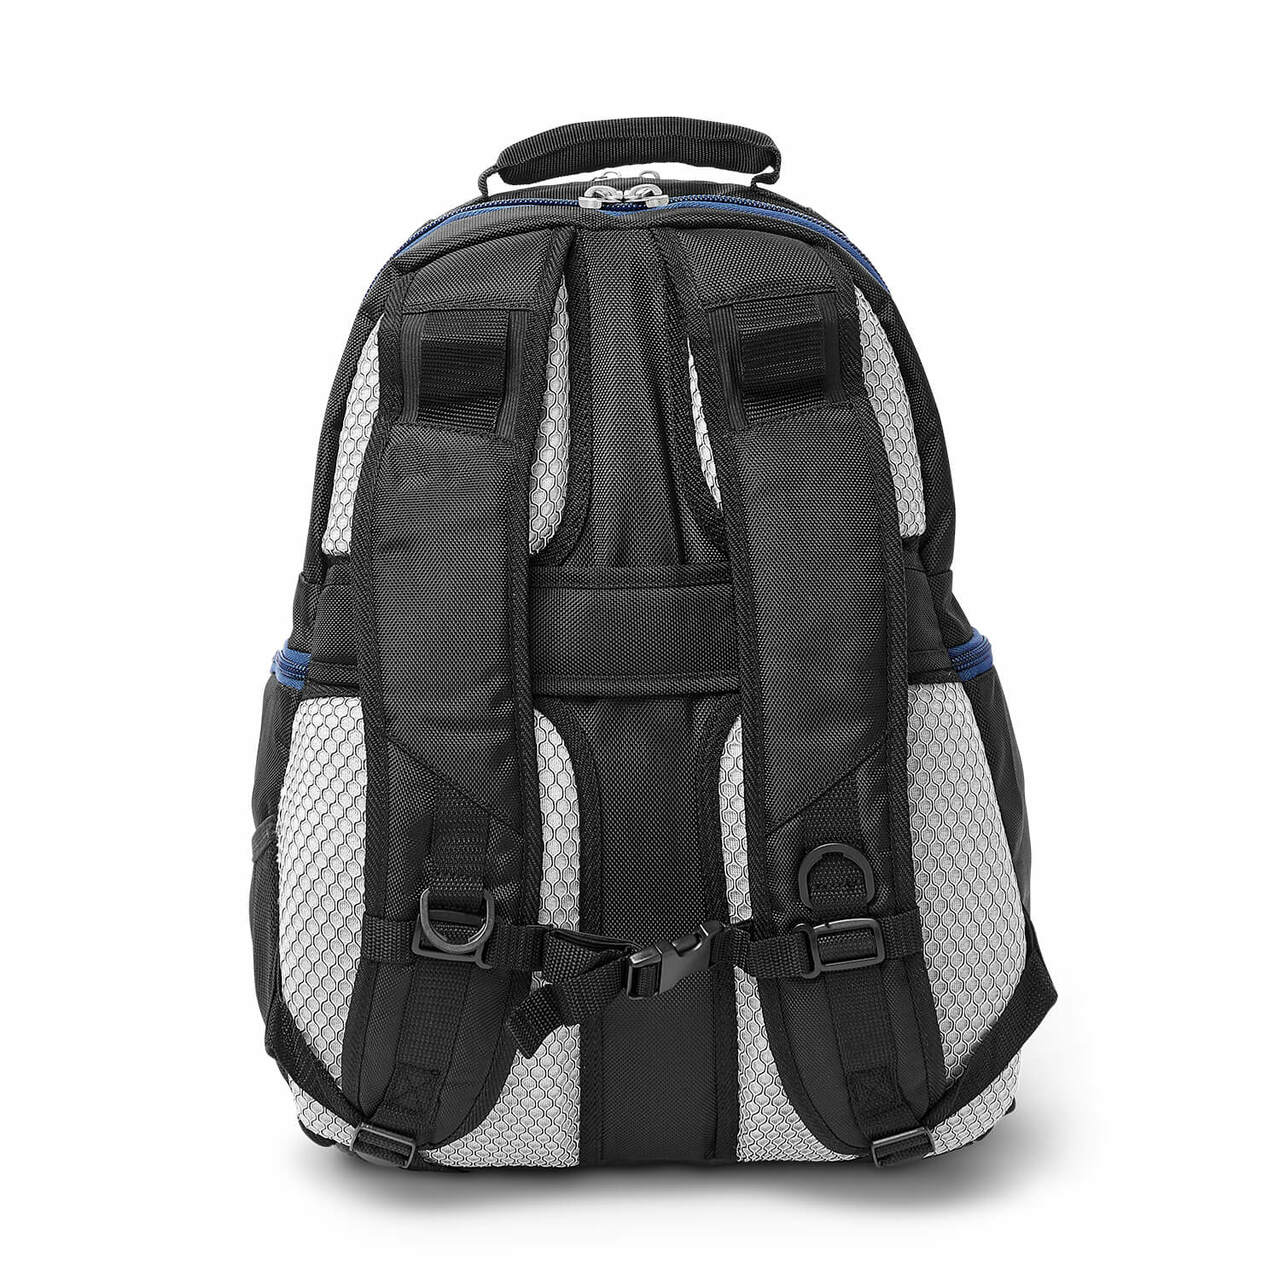 Blues Backpack | St. Louis Blues Laptop Backpack